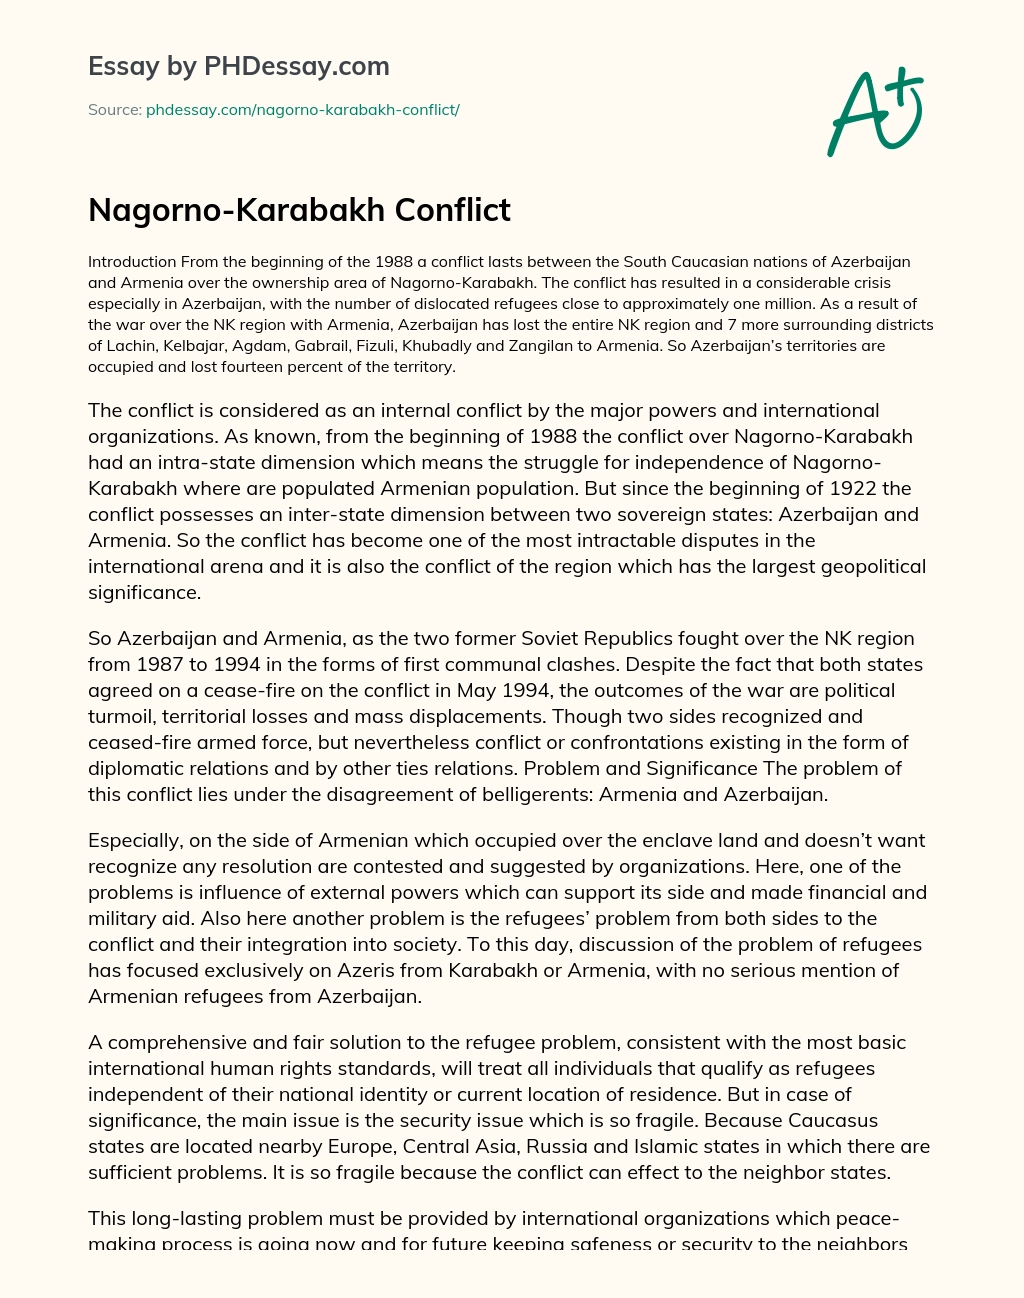 Nagorno-Karabakh Conflict essay